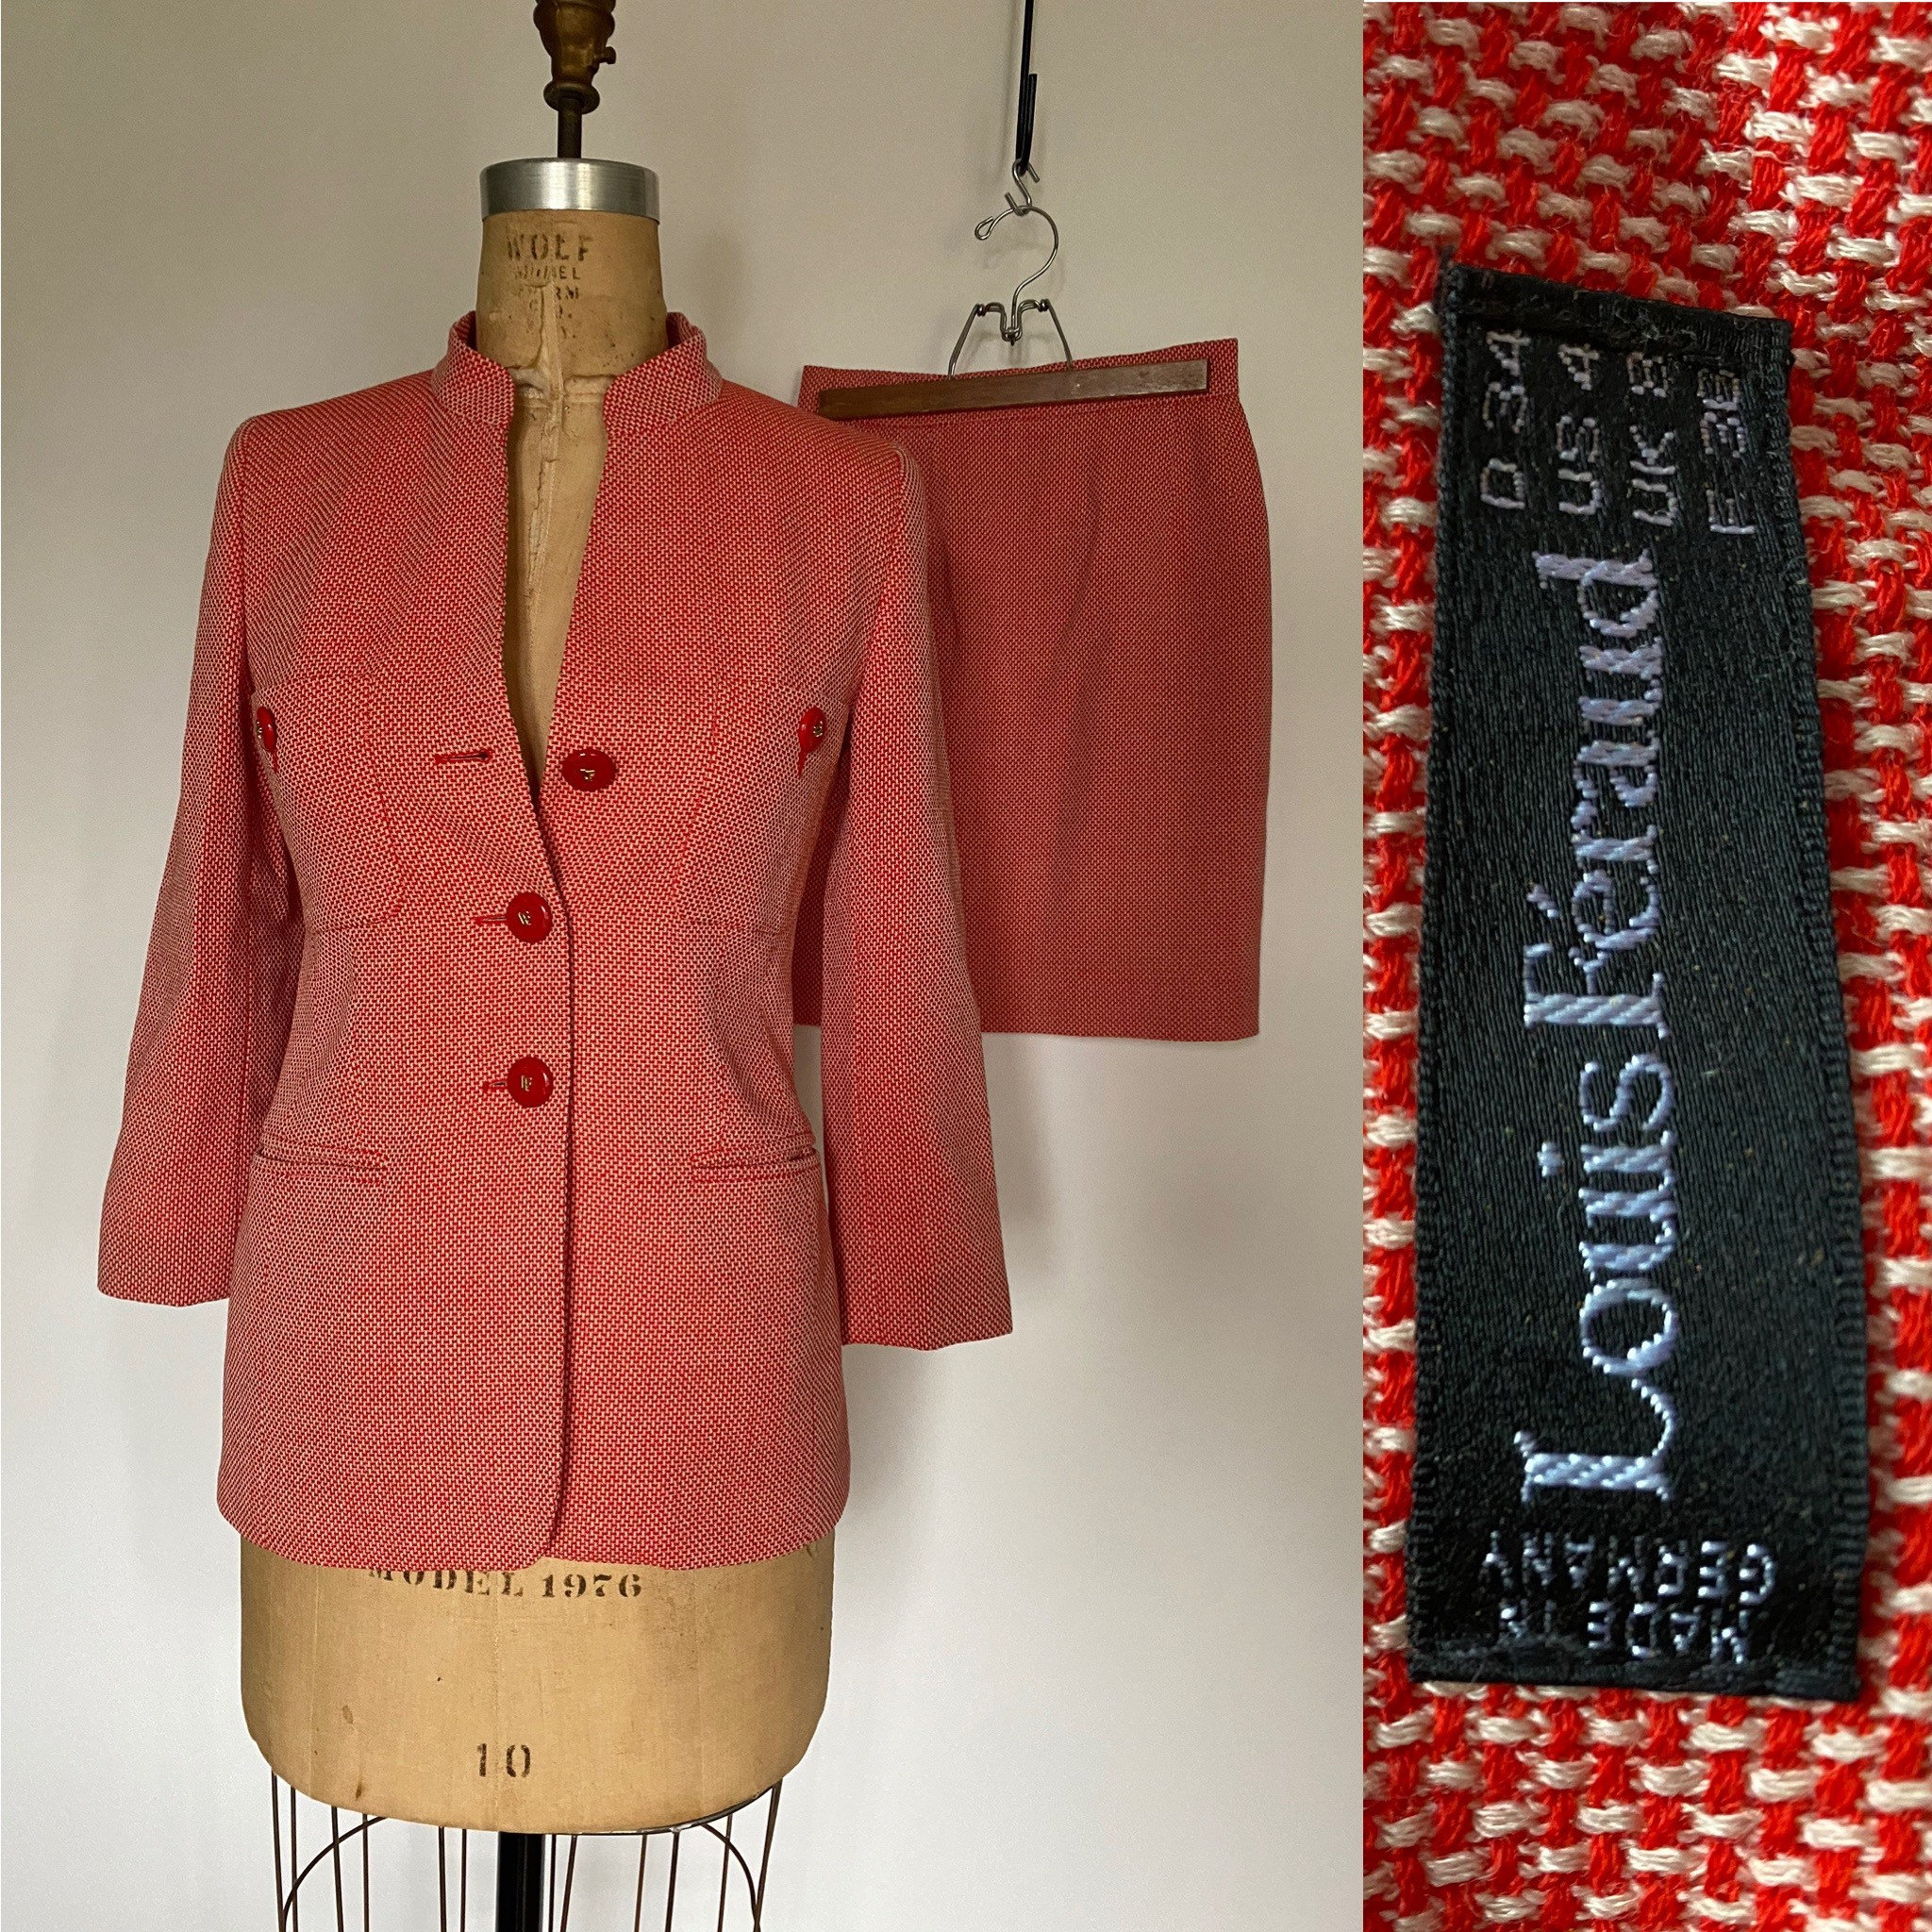 vtgTreasureChest Vintage Louis Feraud Price of Wales Check Tartan Print Wool + Velvet Blazer Jacket S M